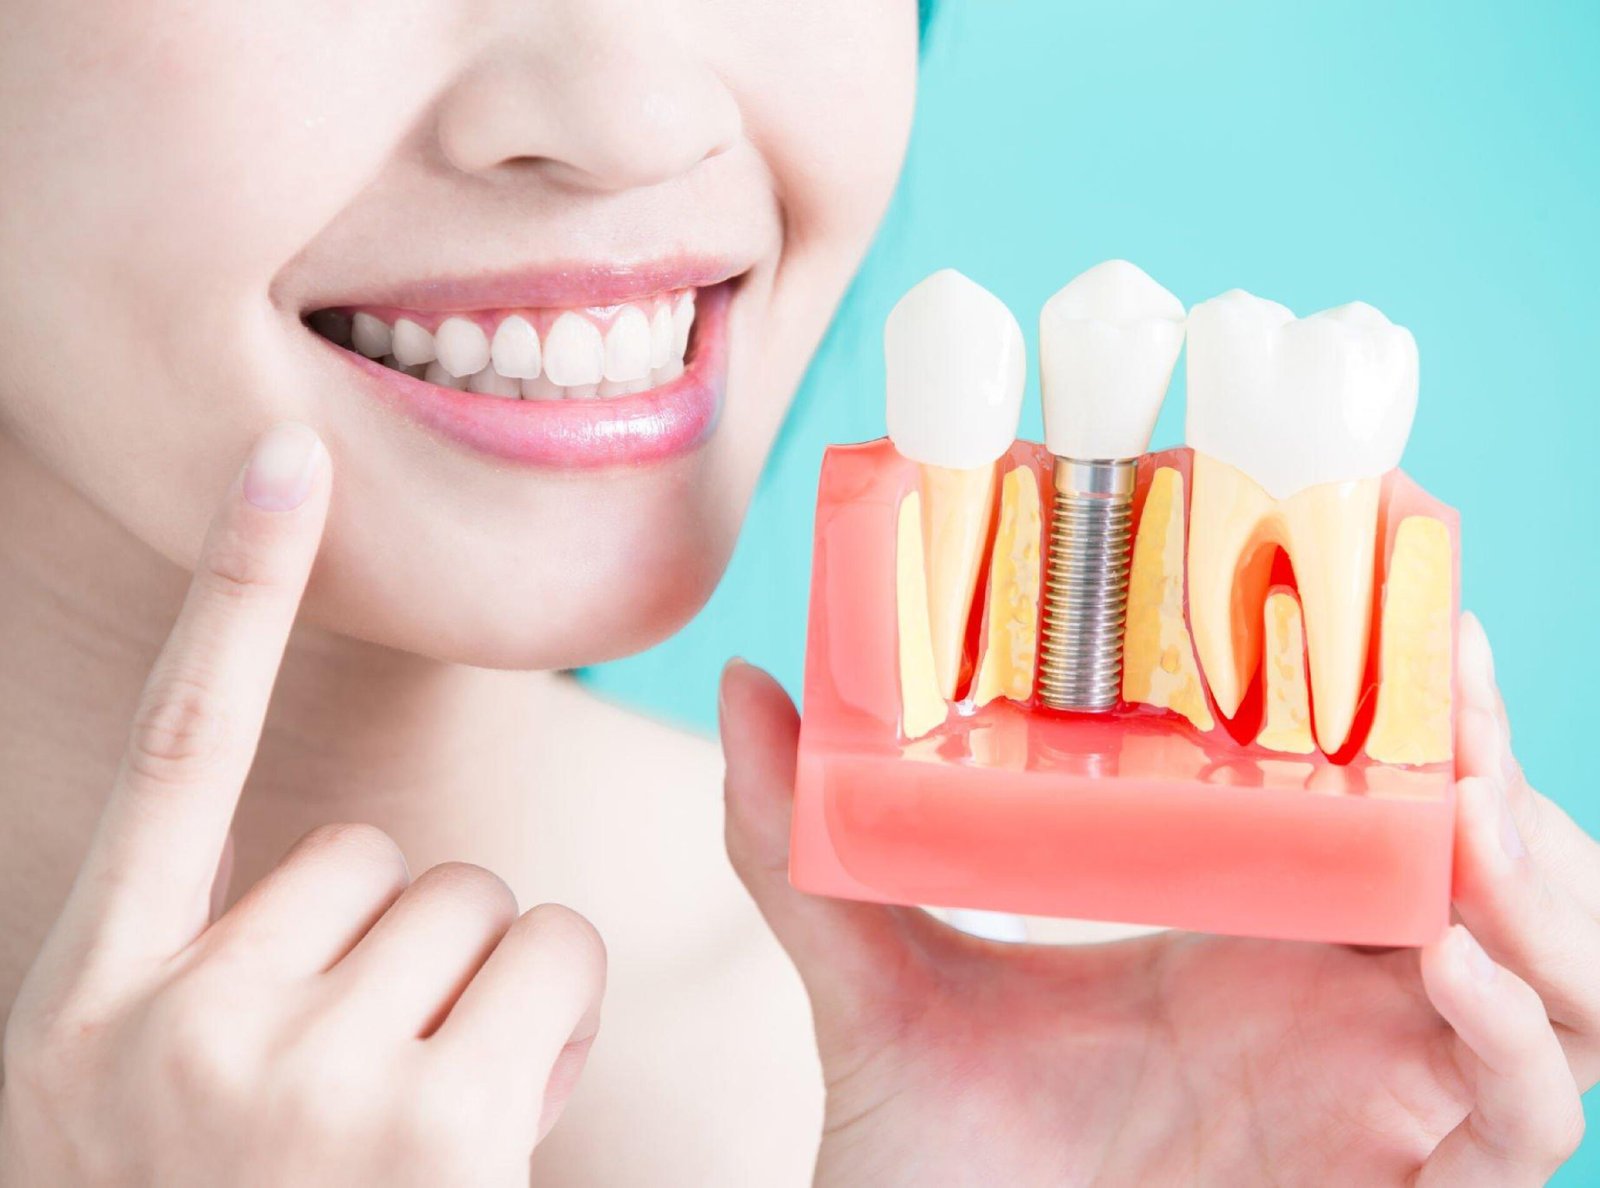 Dental Implants in Nellore